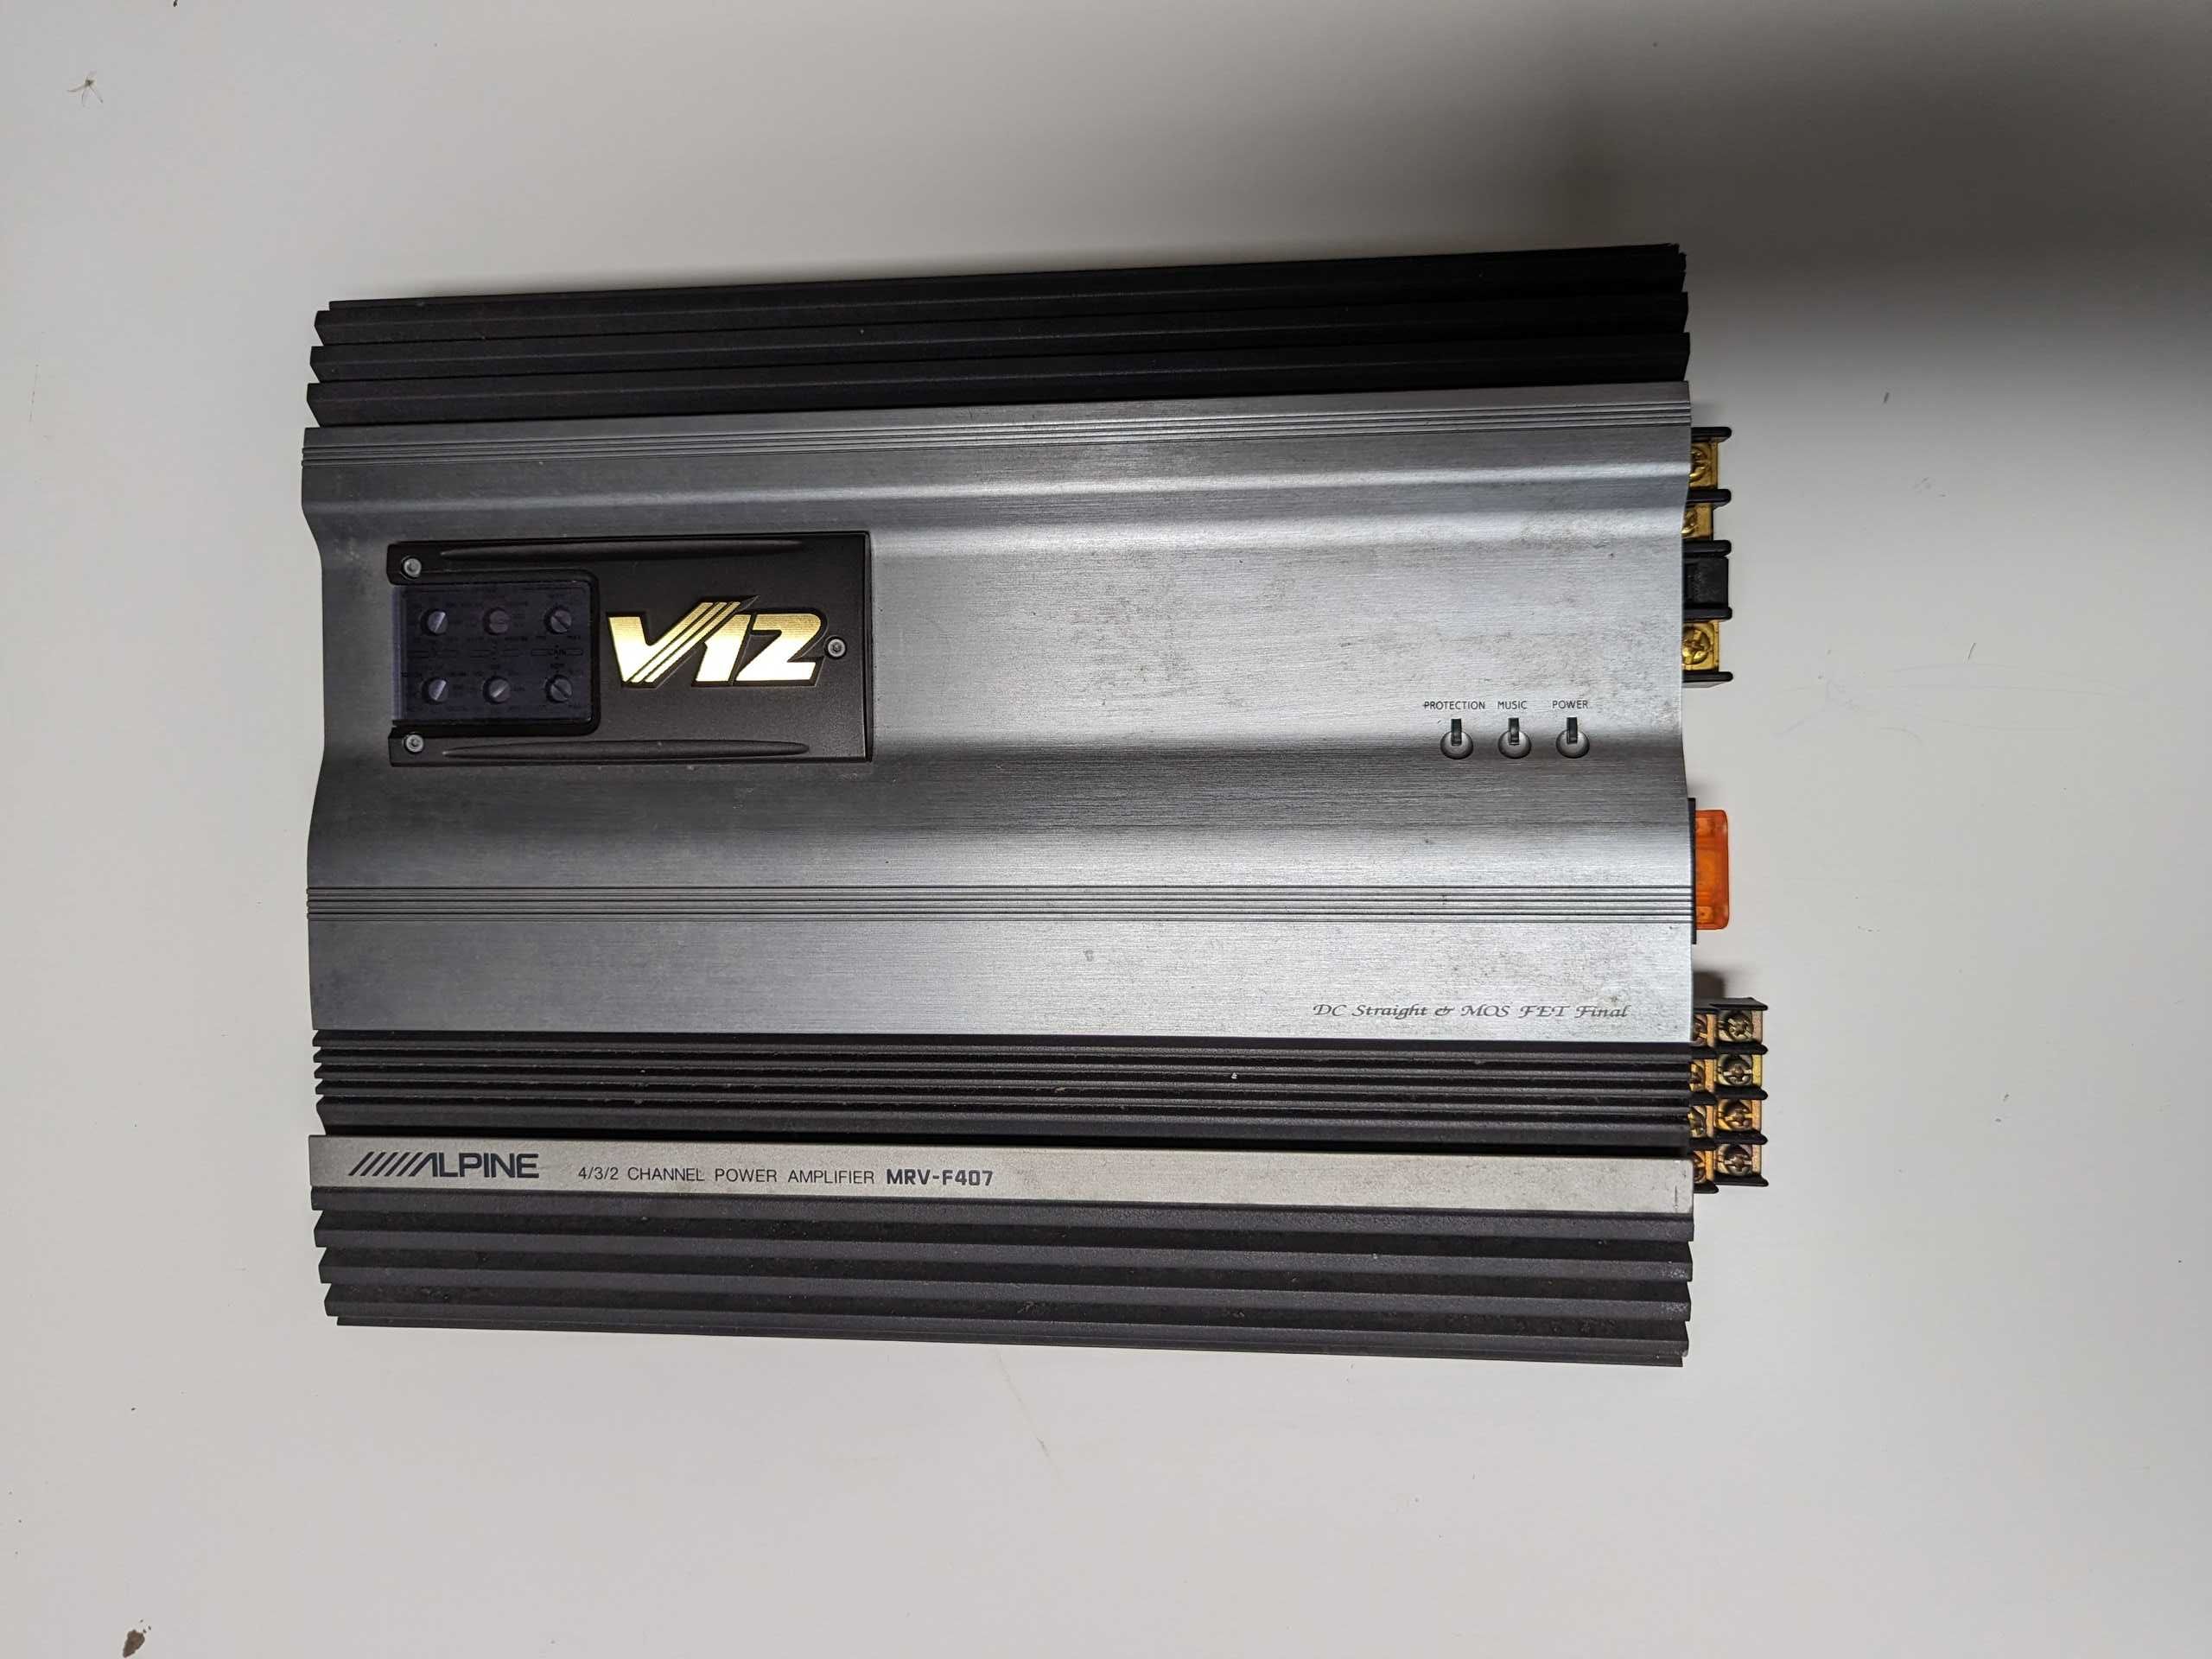 Amplificador Alpine V12 MRV F407